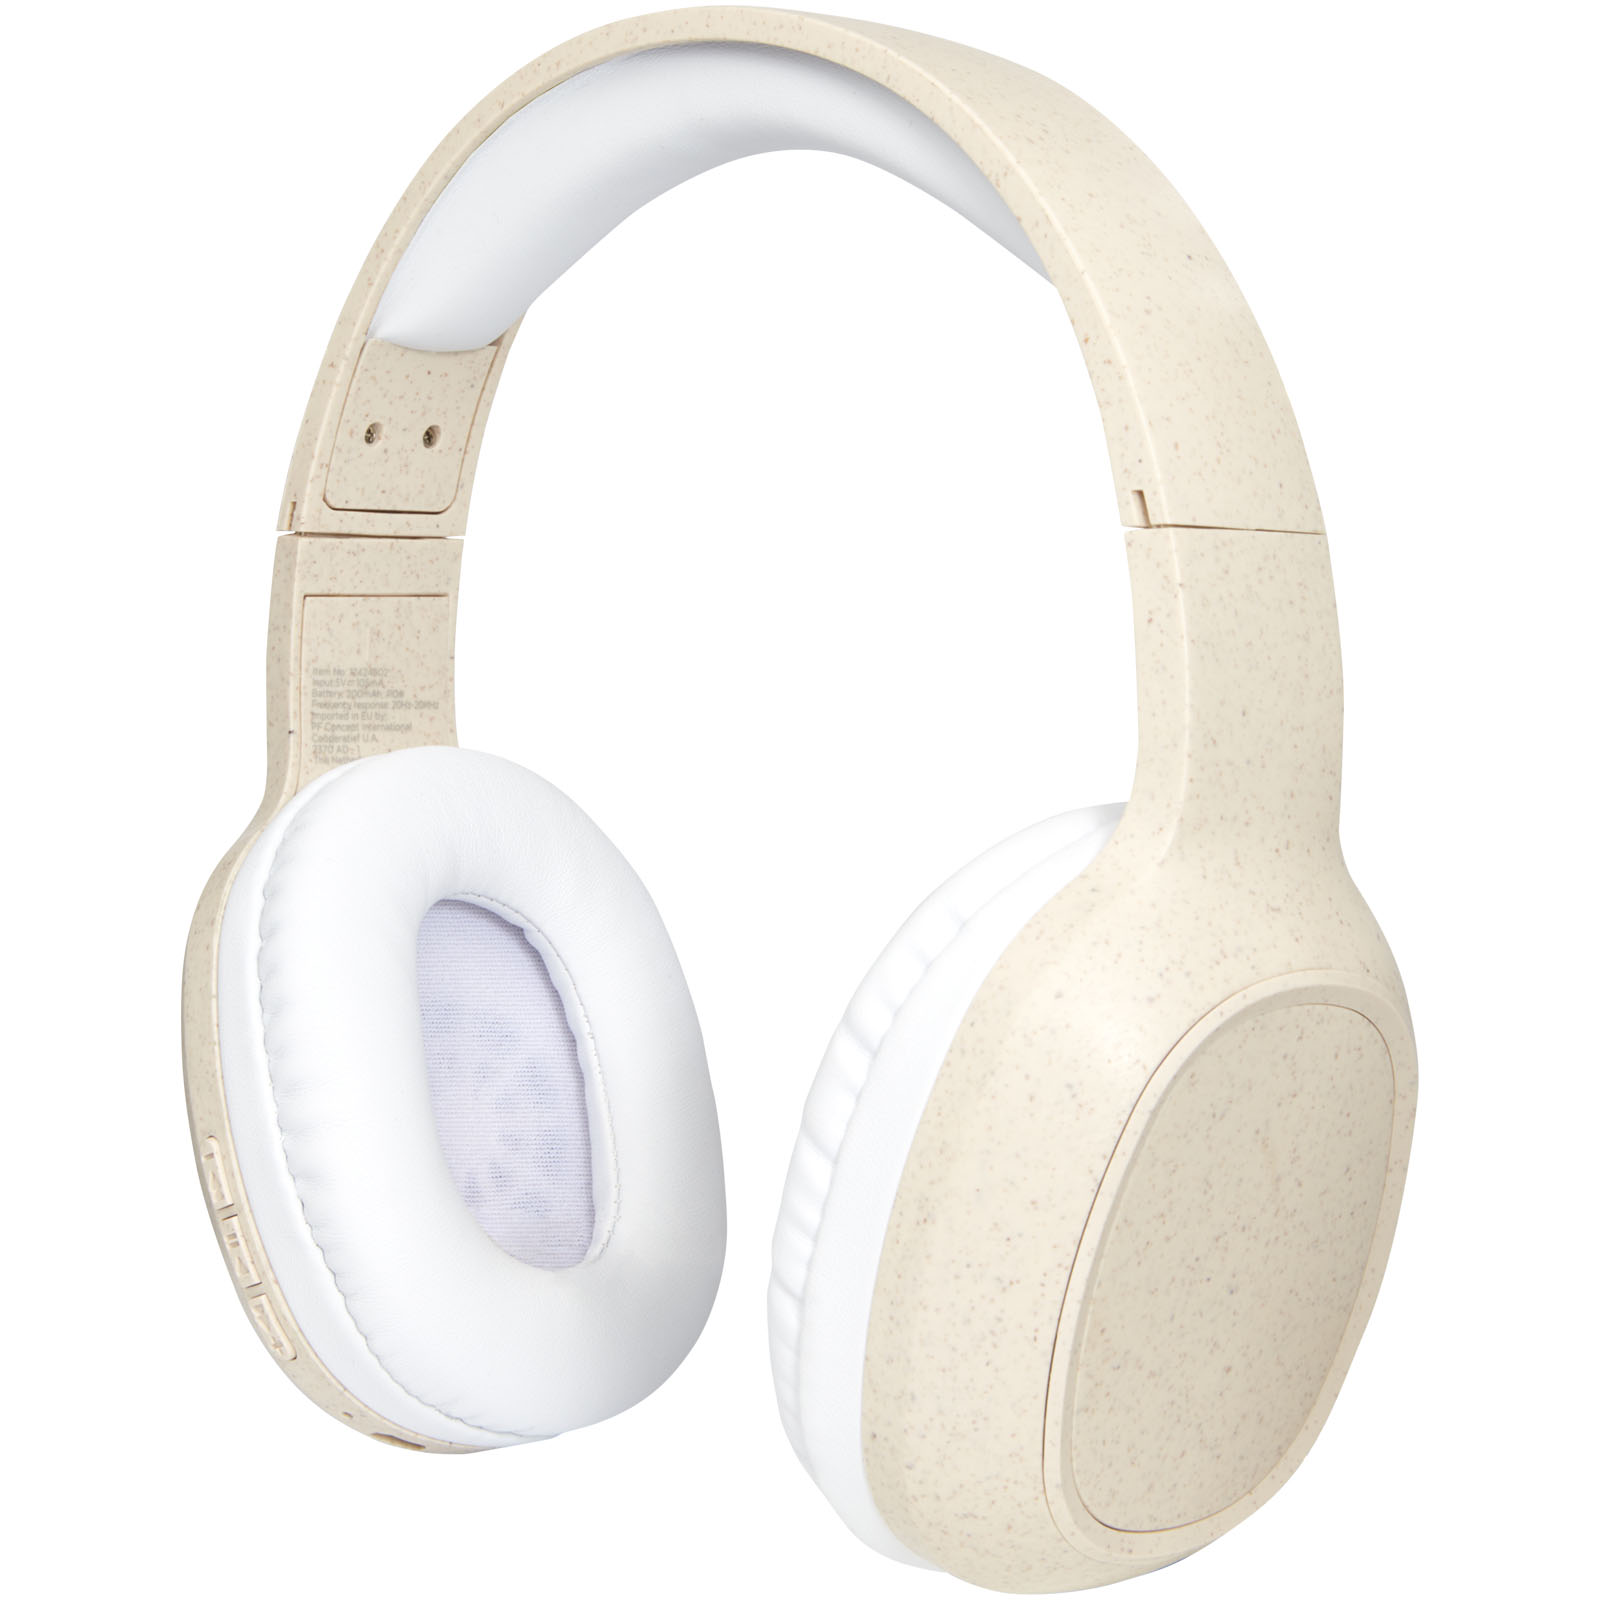 Advertising Headphones - Riff wheat straw Bluetooth® headphones with microphone